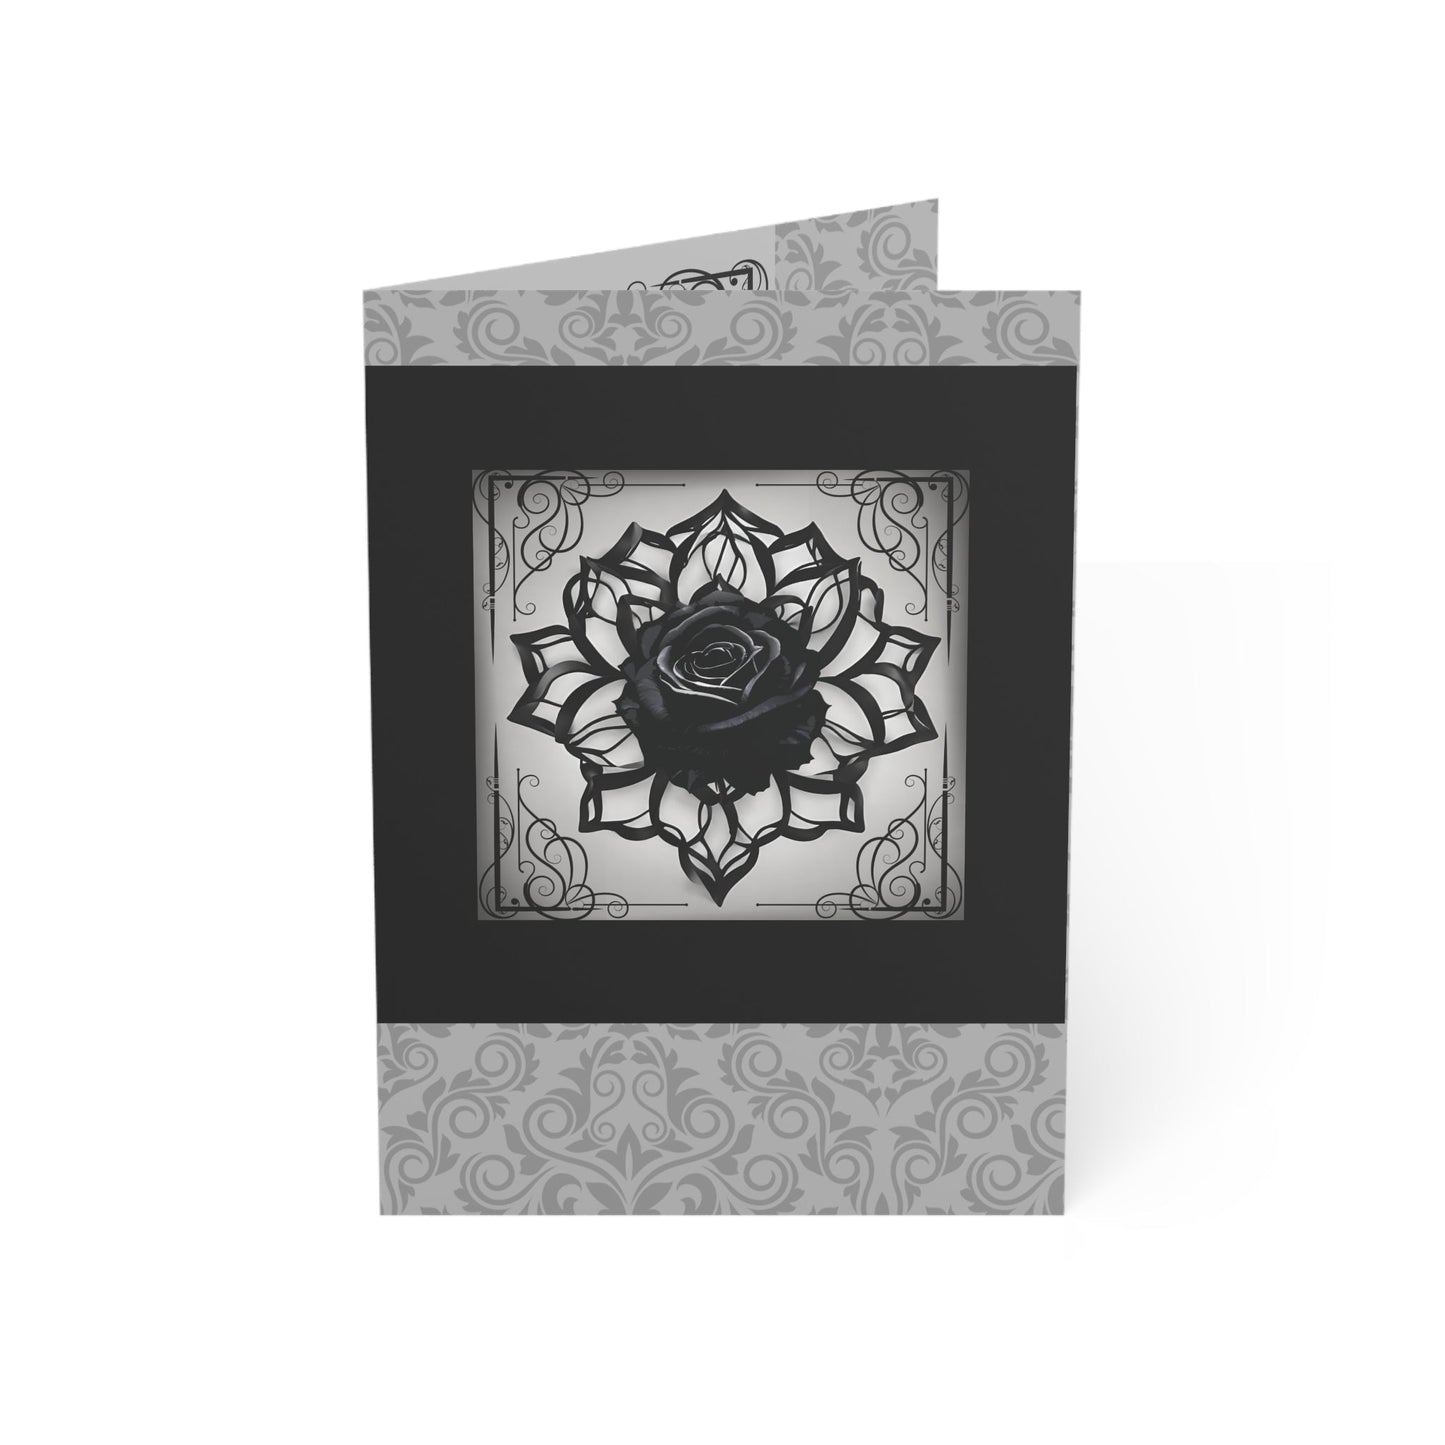 Sinister Rose Greeting Cards |  (50pcs)